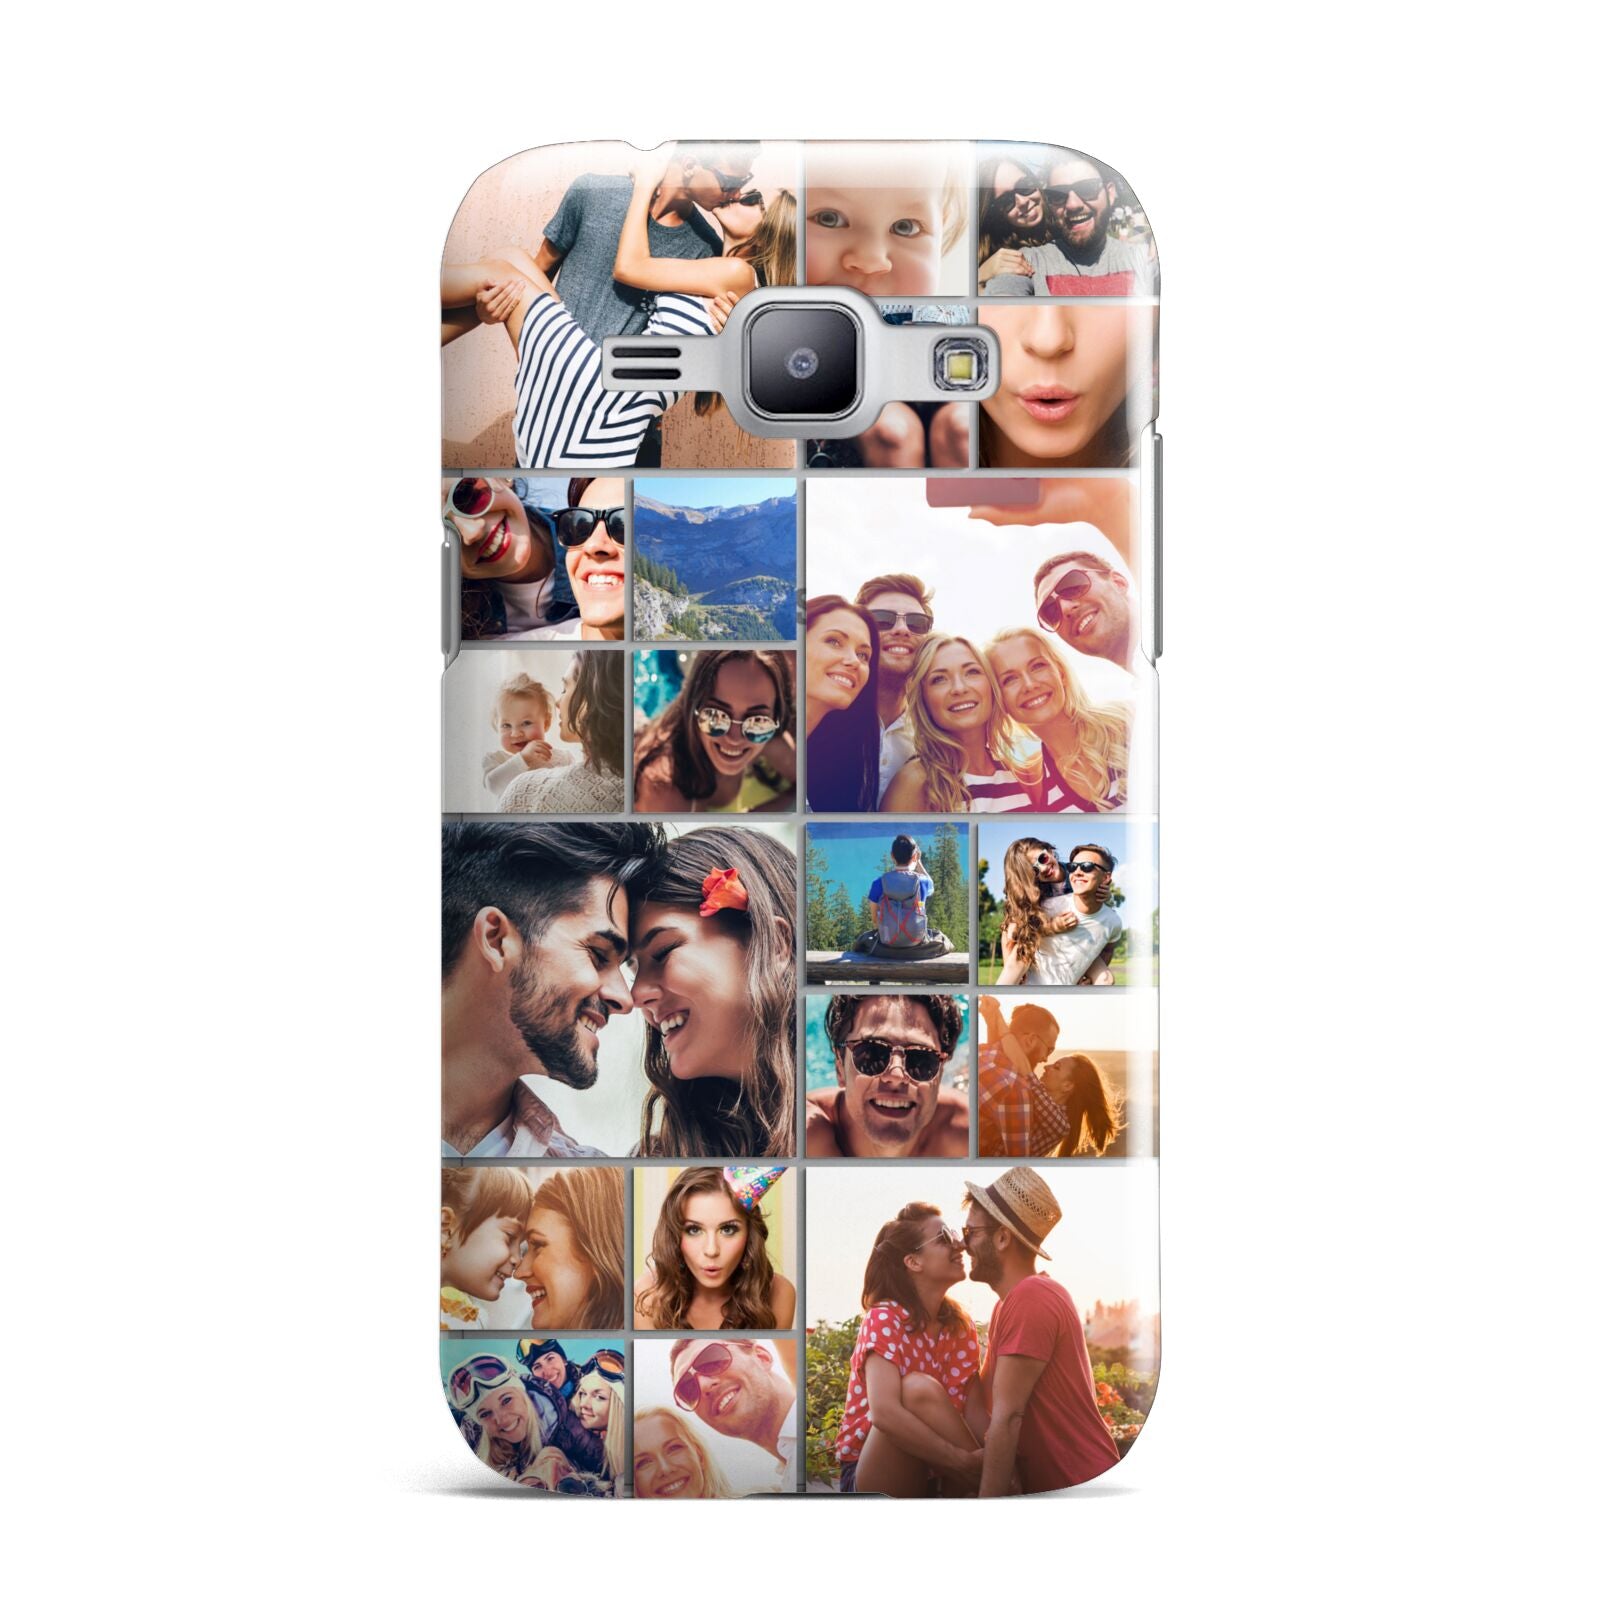 Photo Grid Samsung Galaxy J1 2015 Case